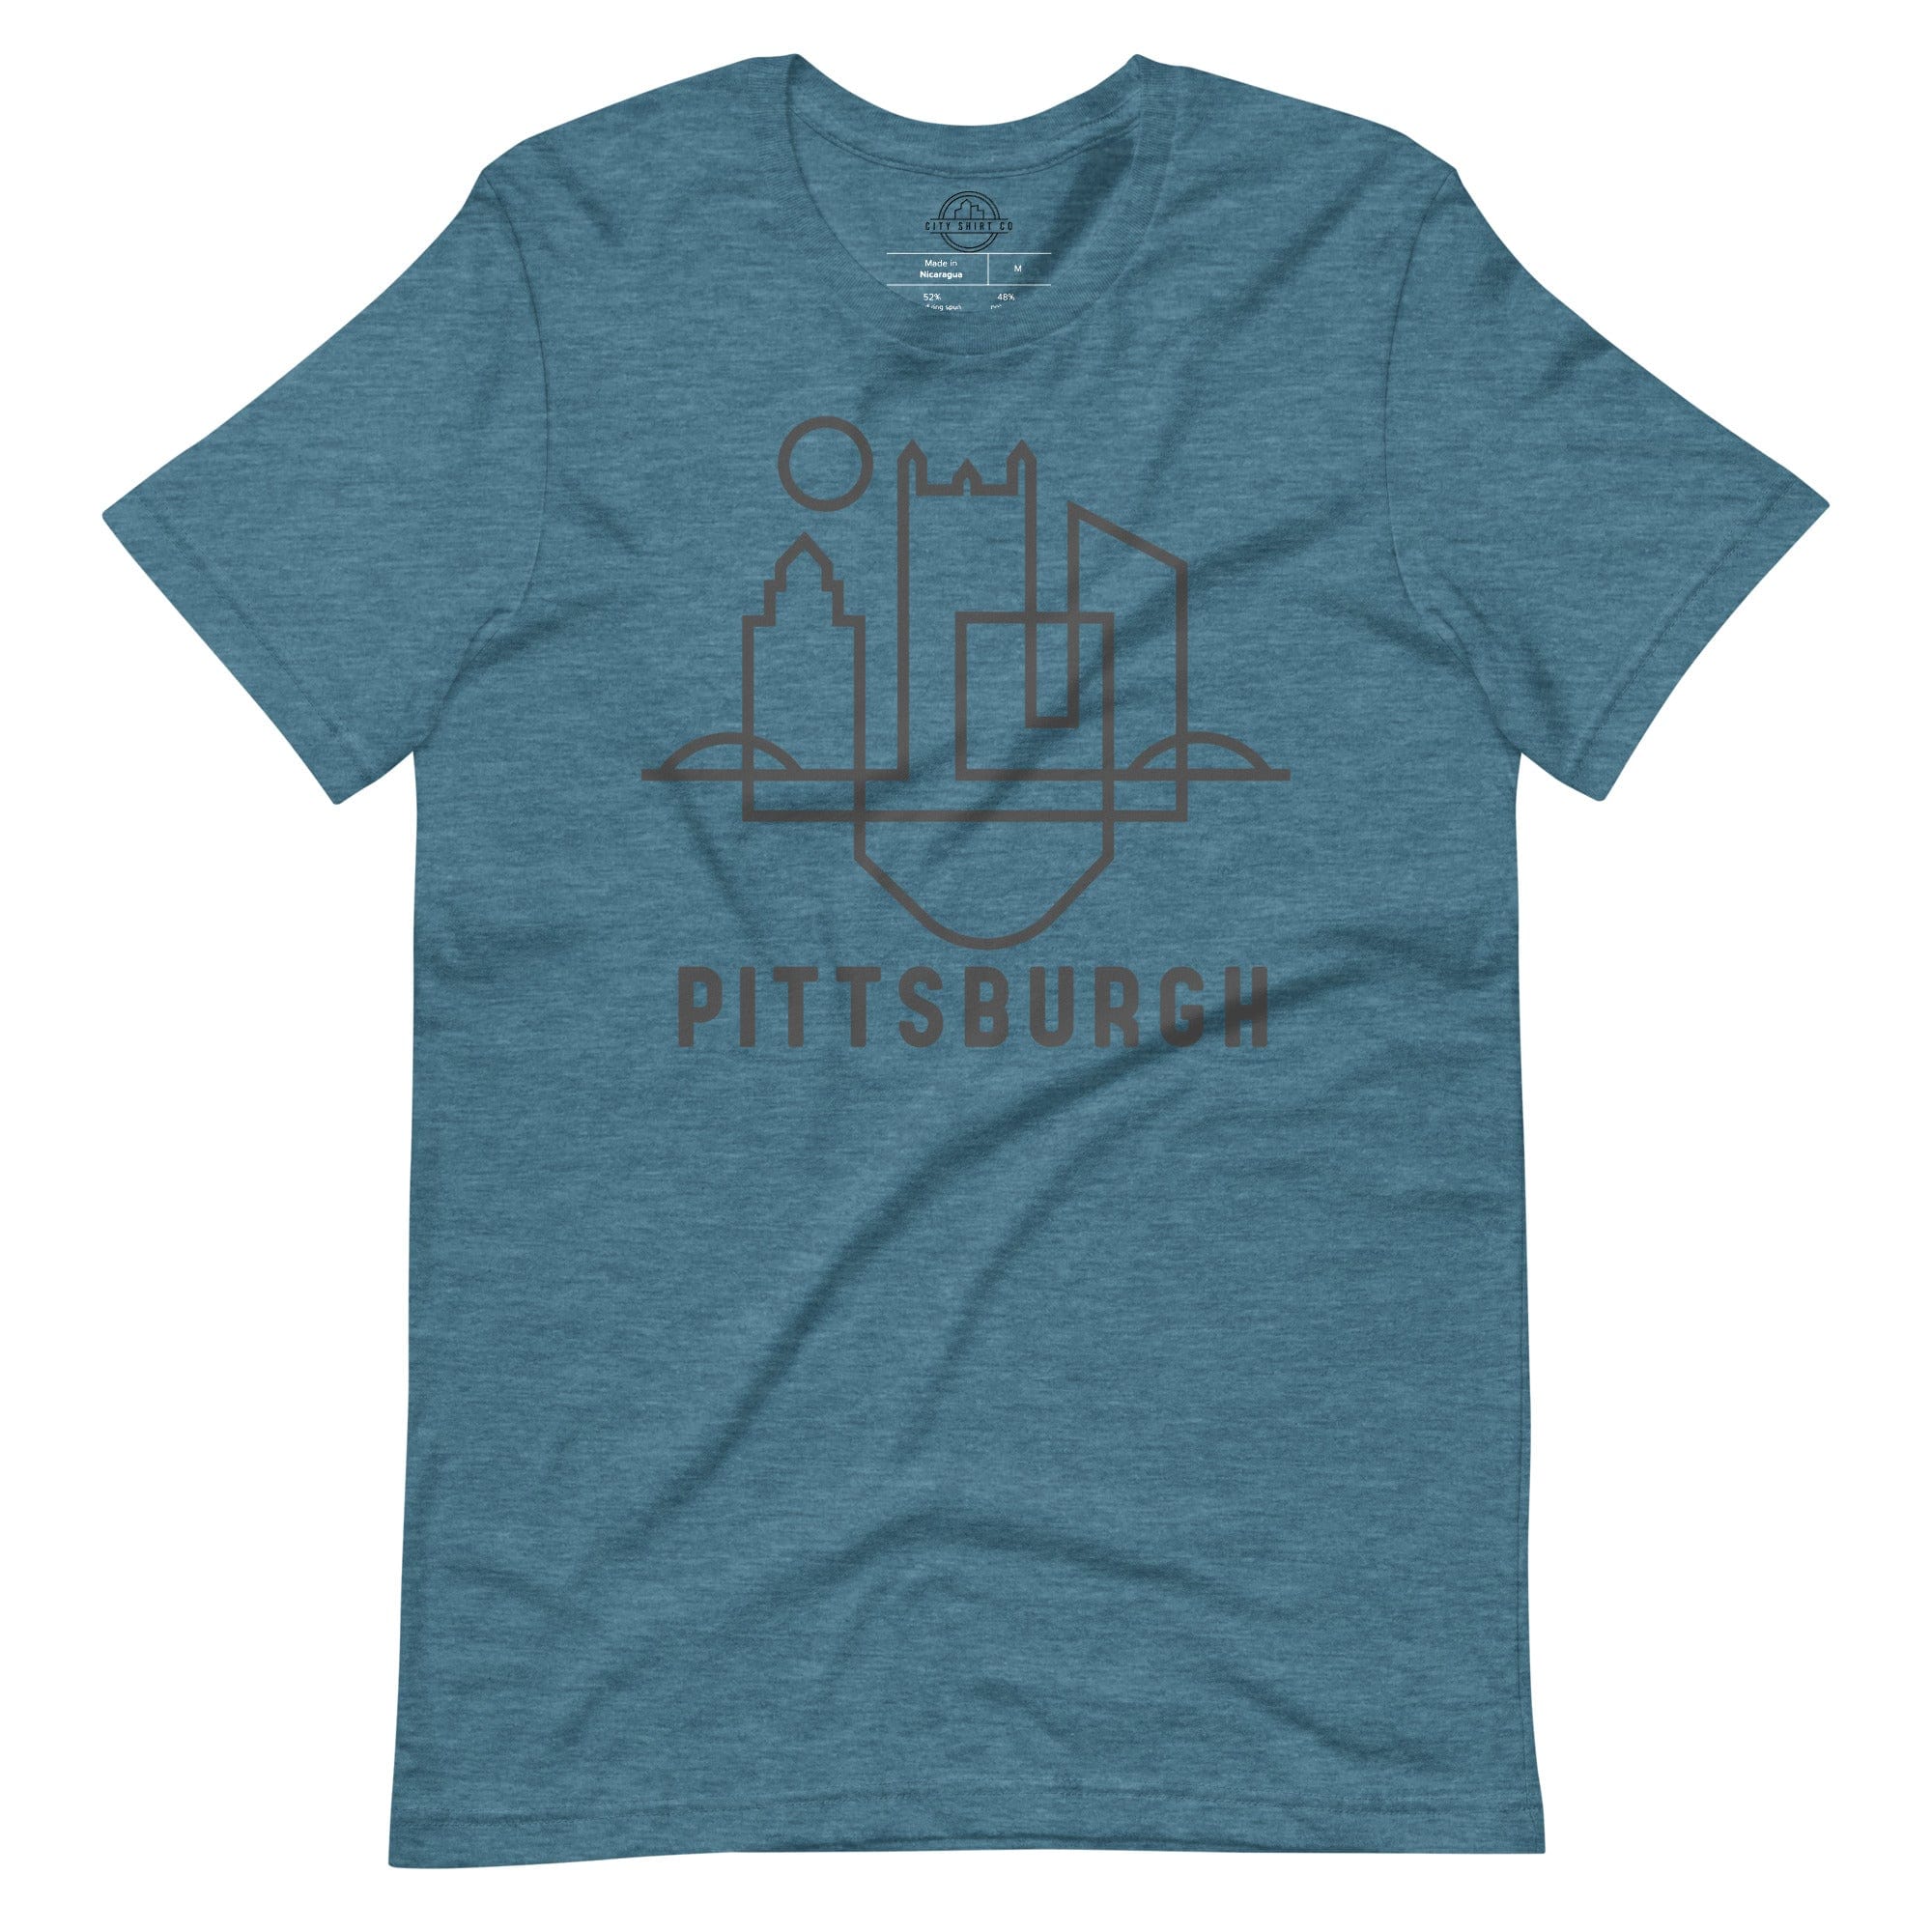 City Shirt Co Pittsburgh Urban Dweller Street Tee Heather Deep Teal / S